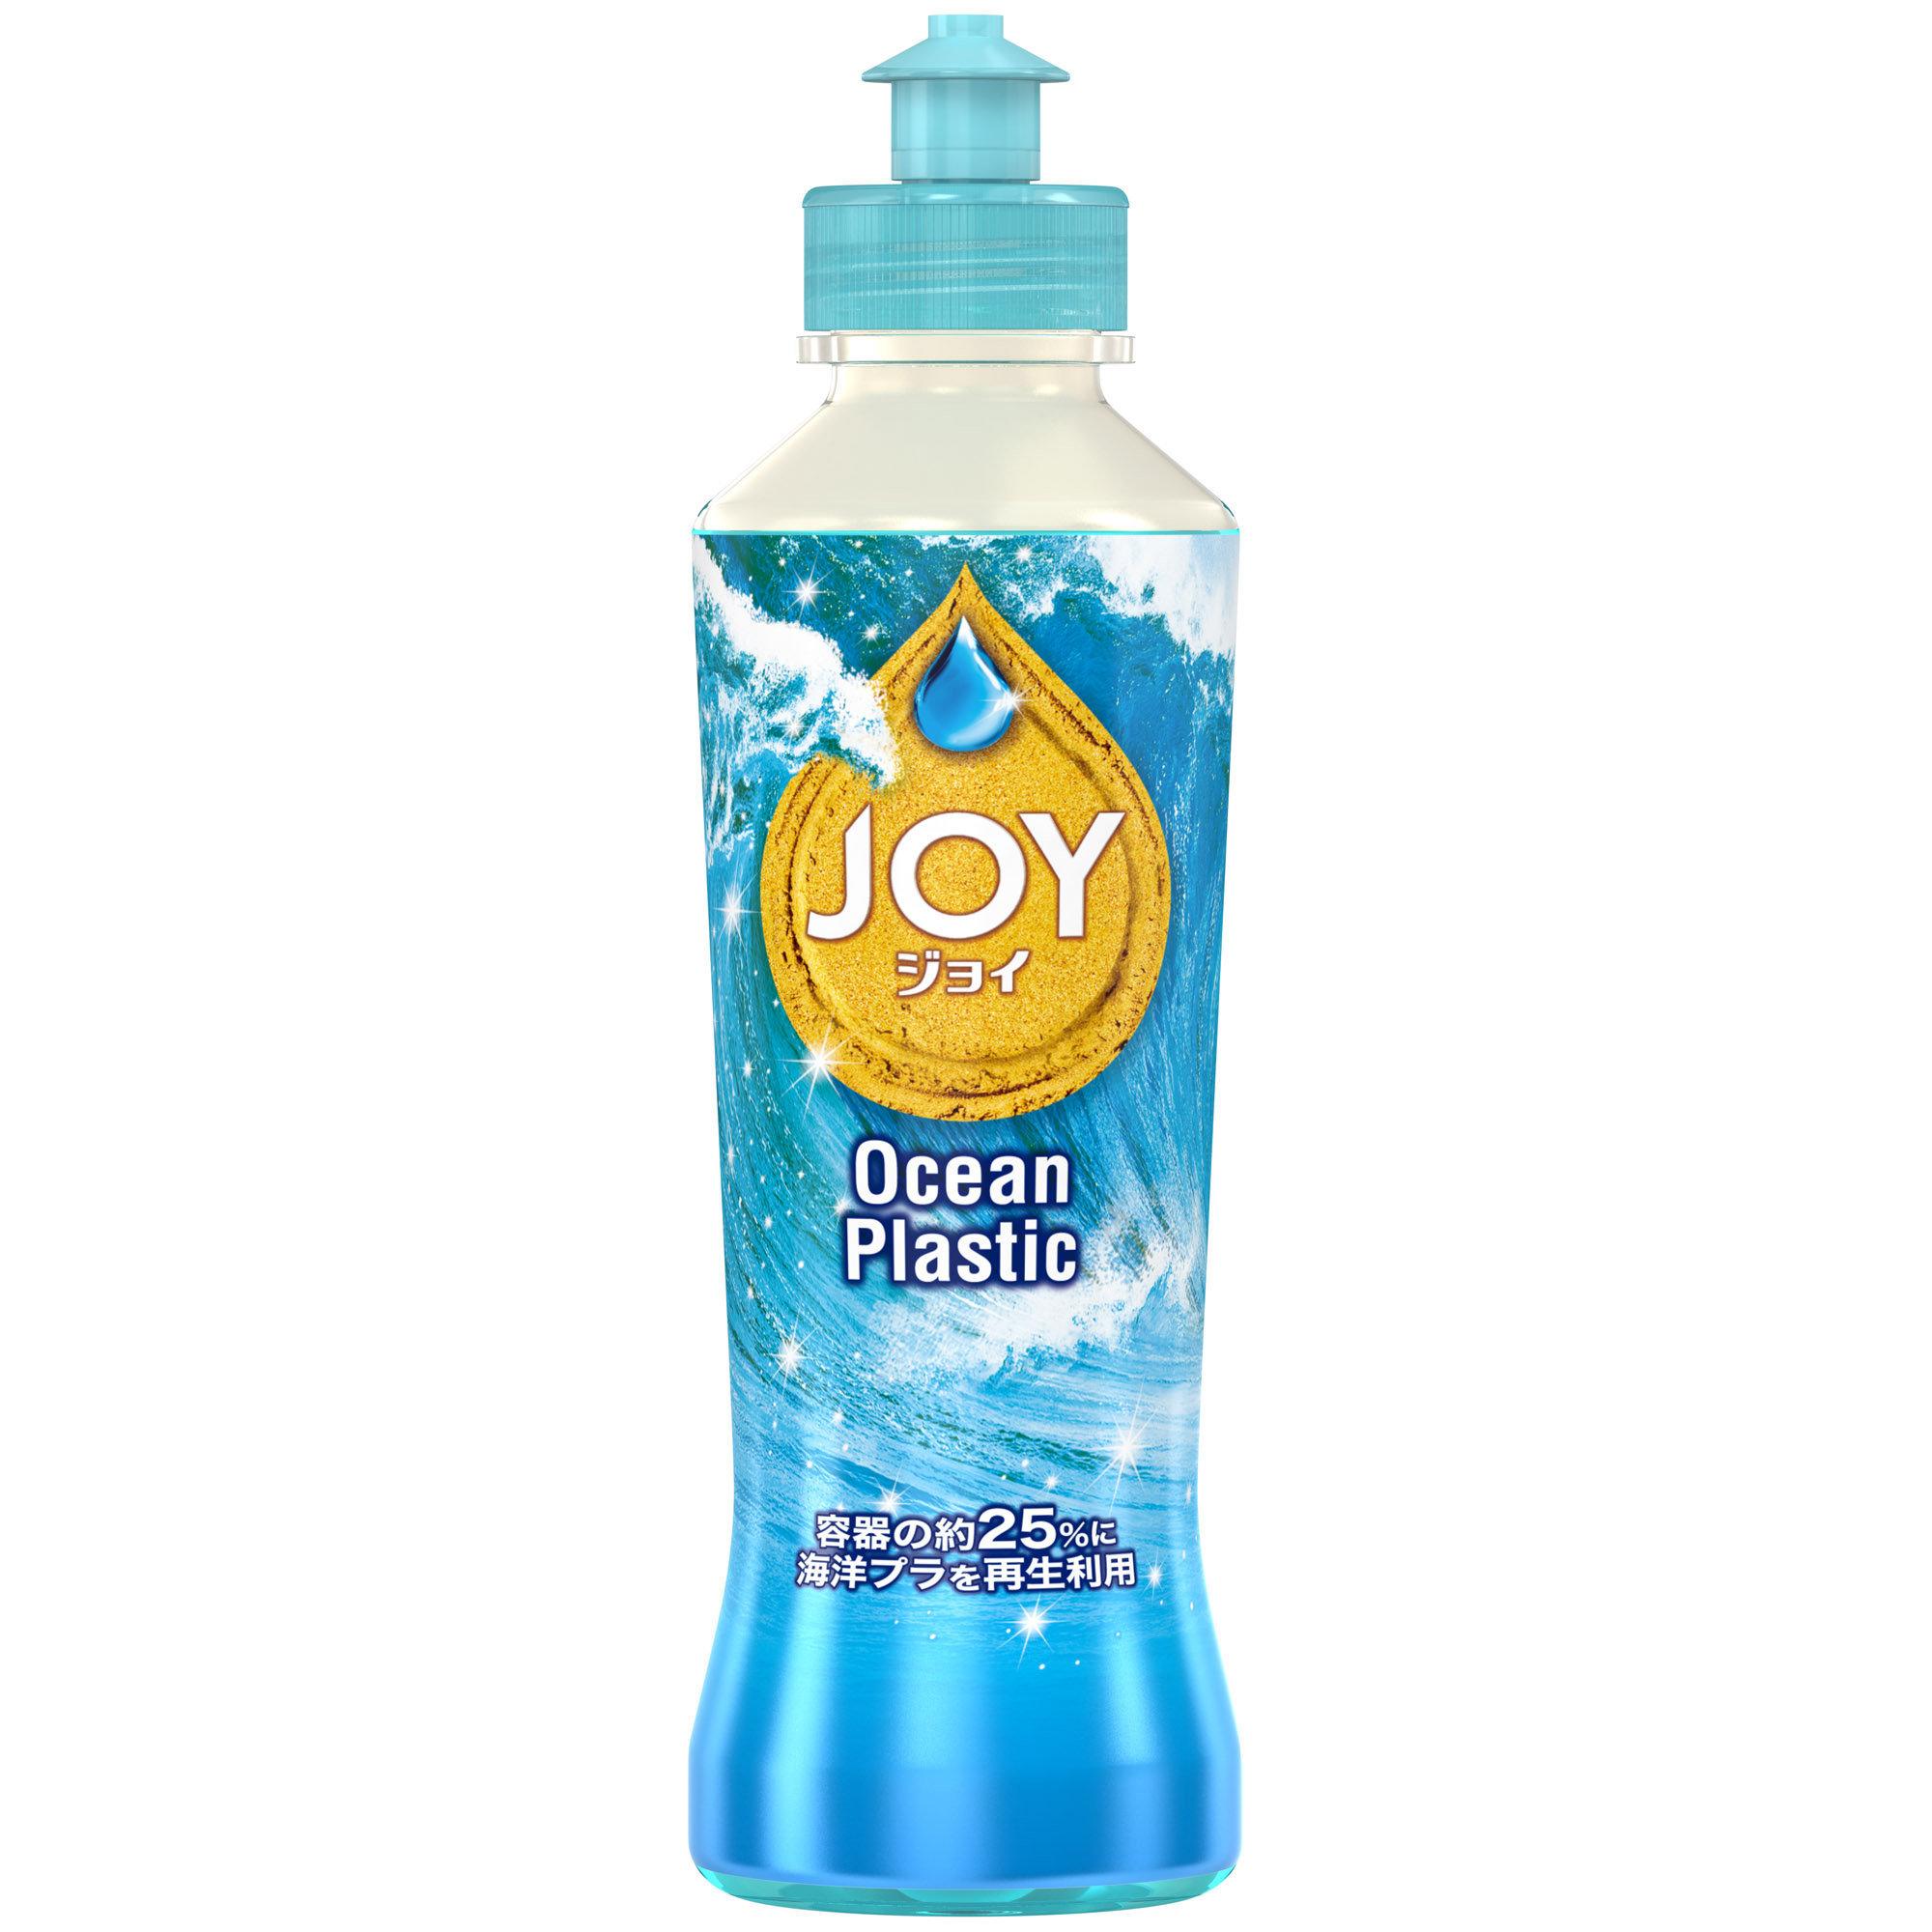 ｐ ｇジャパン海洋プラスチック再生ボトルプロジェクト Joy Ocean Plastic ジョイ オーシャン プラスチック 11月上旬新発売 ｐ ｇ ジャパン合同会社のプレスリリース